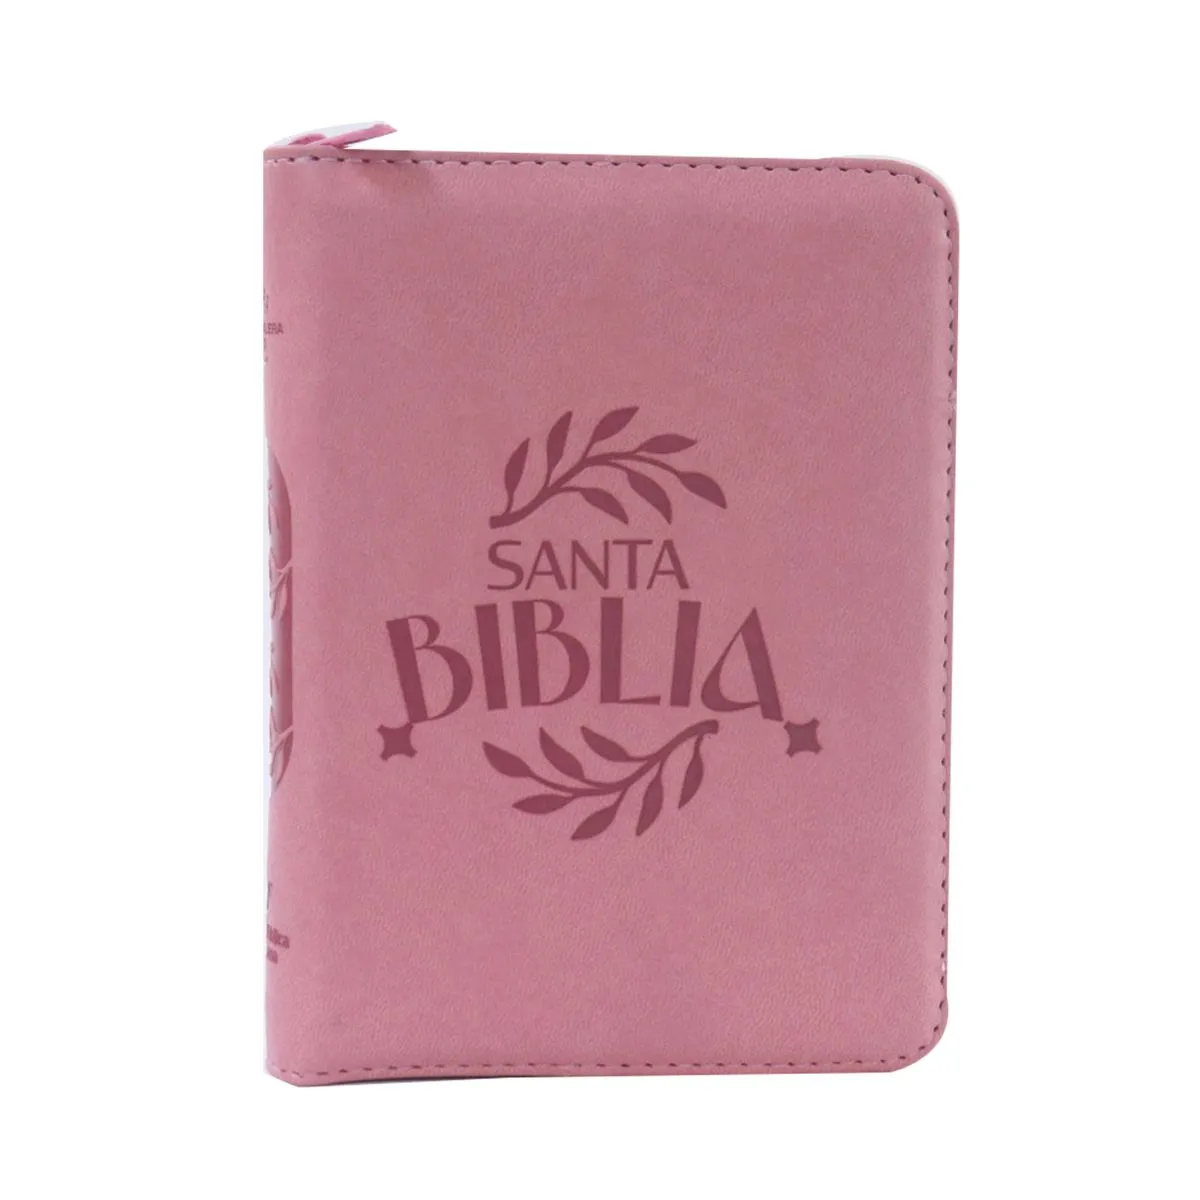 Biblia/ RVR026cZLM/PJR/ Rosa Canto Blanco/ Cierre